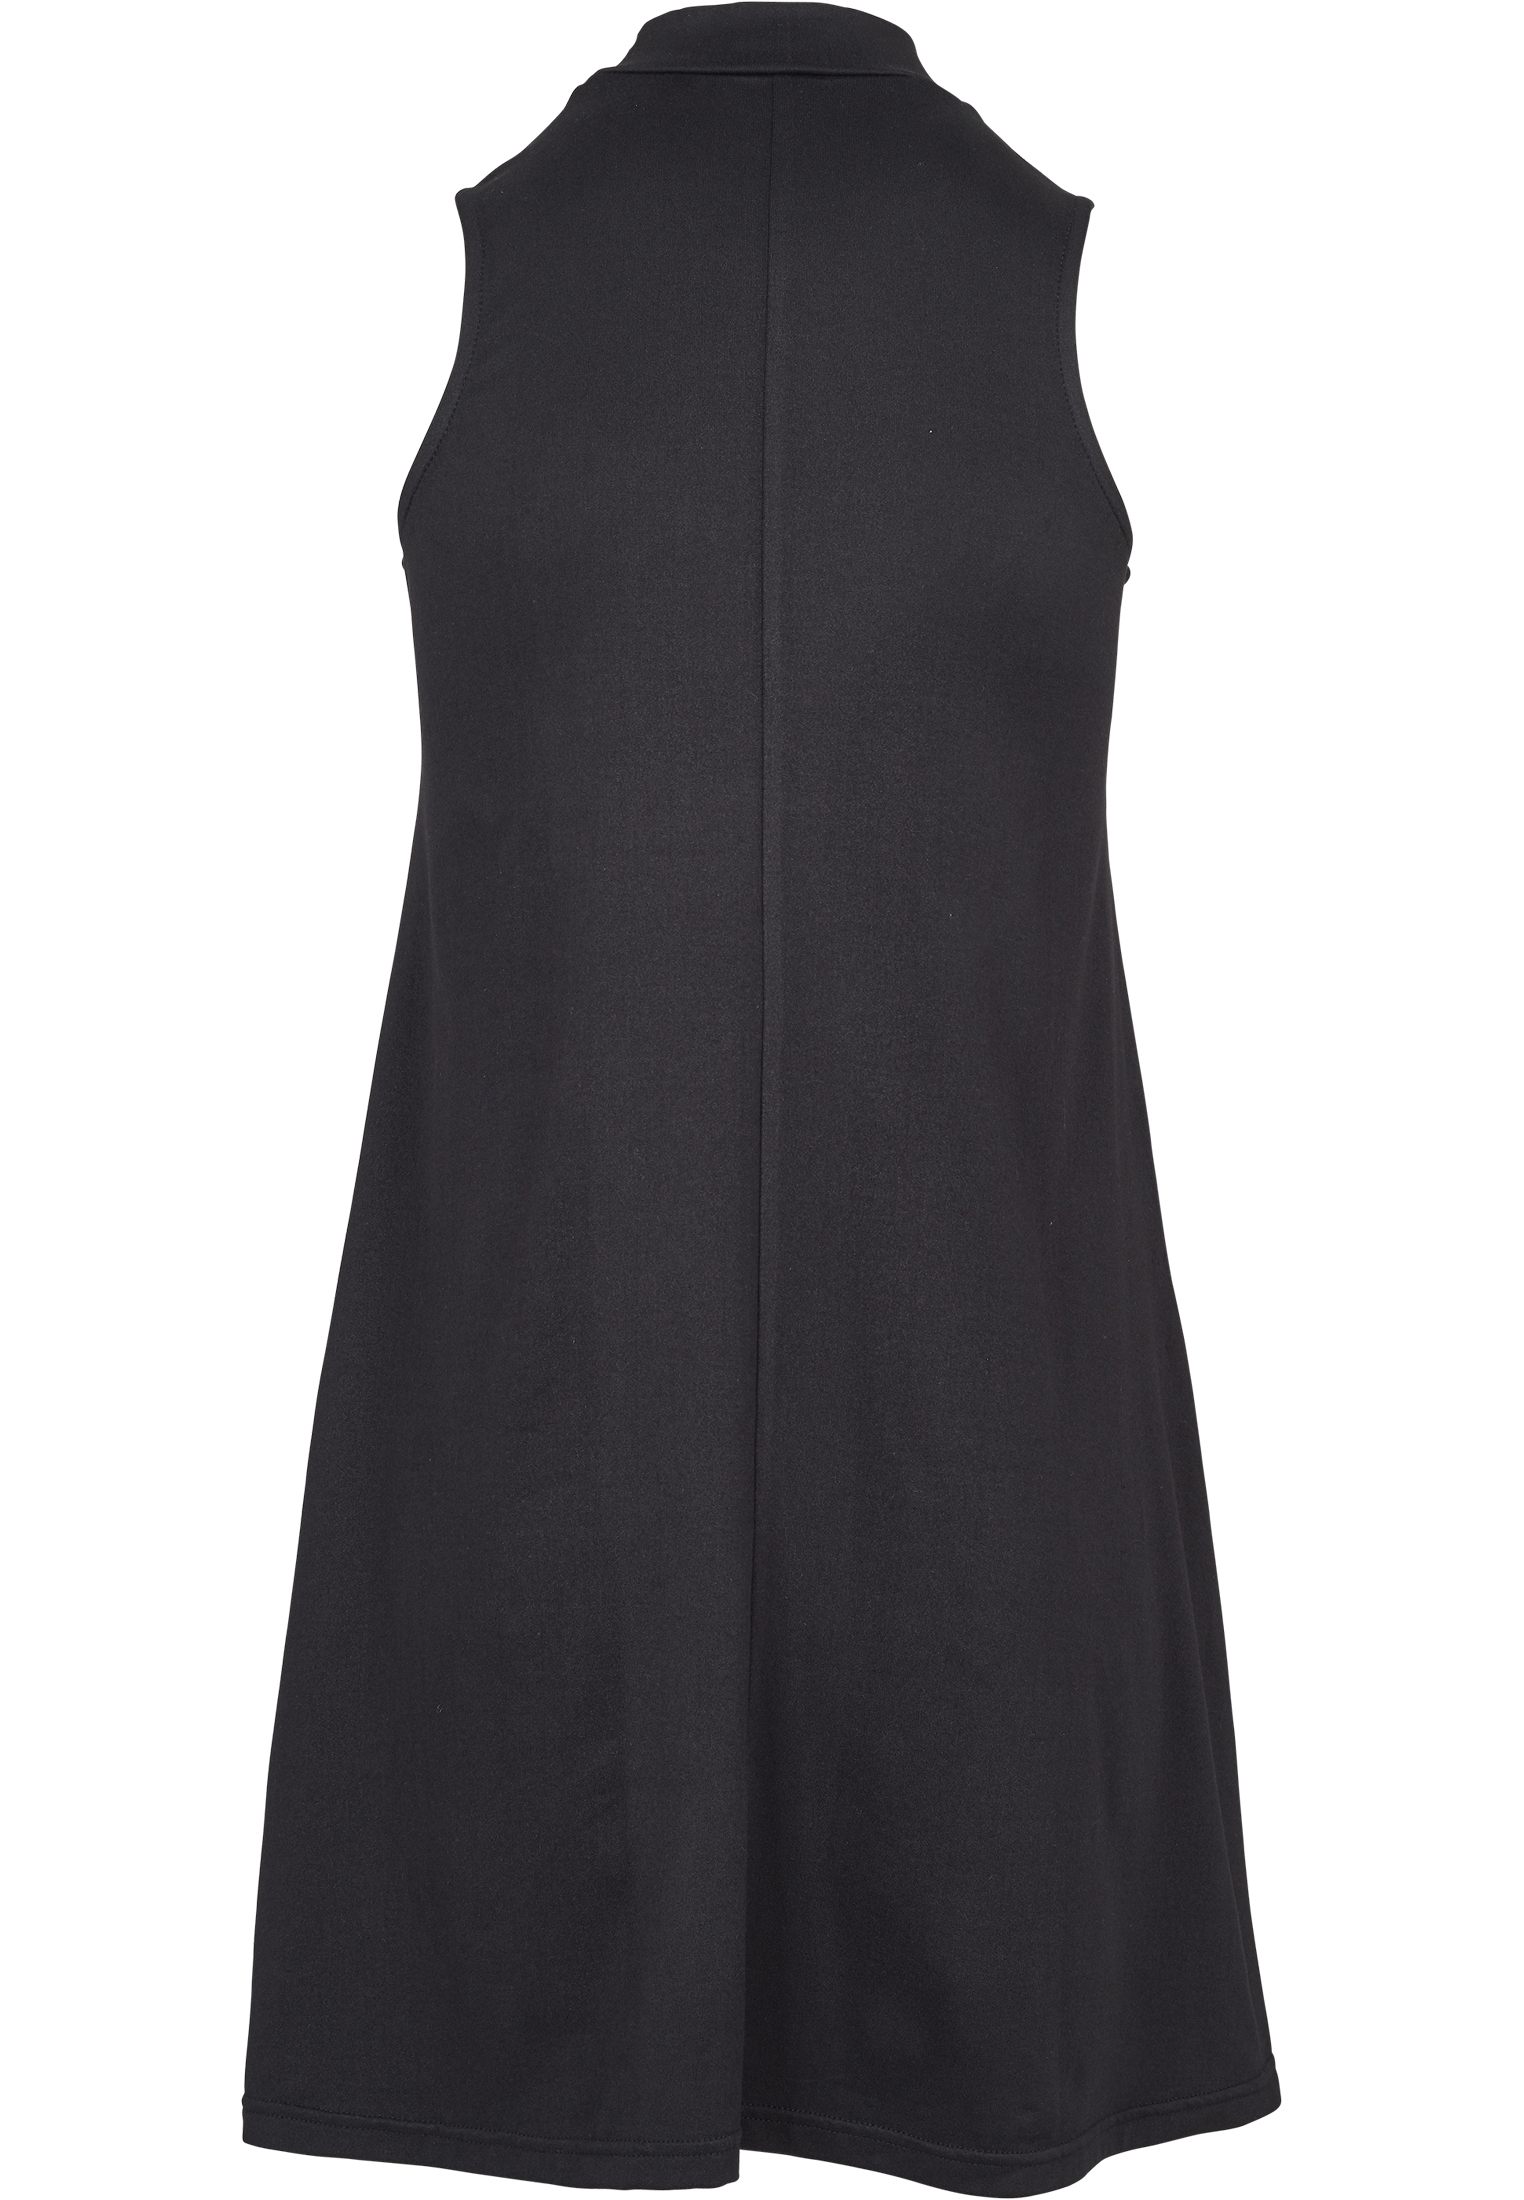 Curvy Ladies A-Line Turtleneck Dress in Farbe black